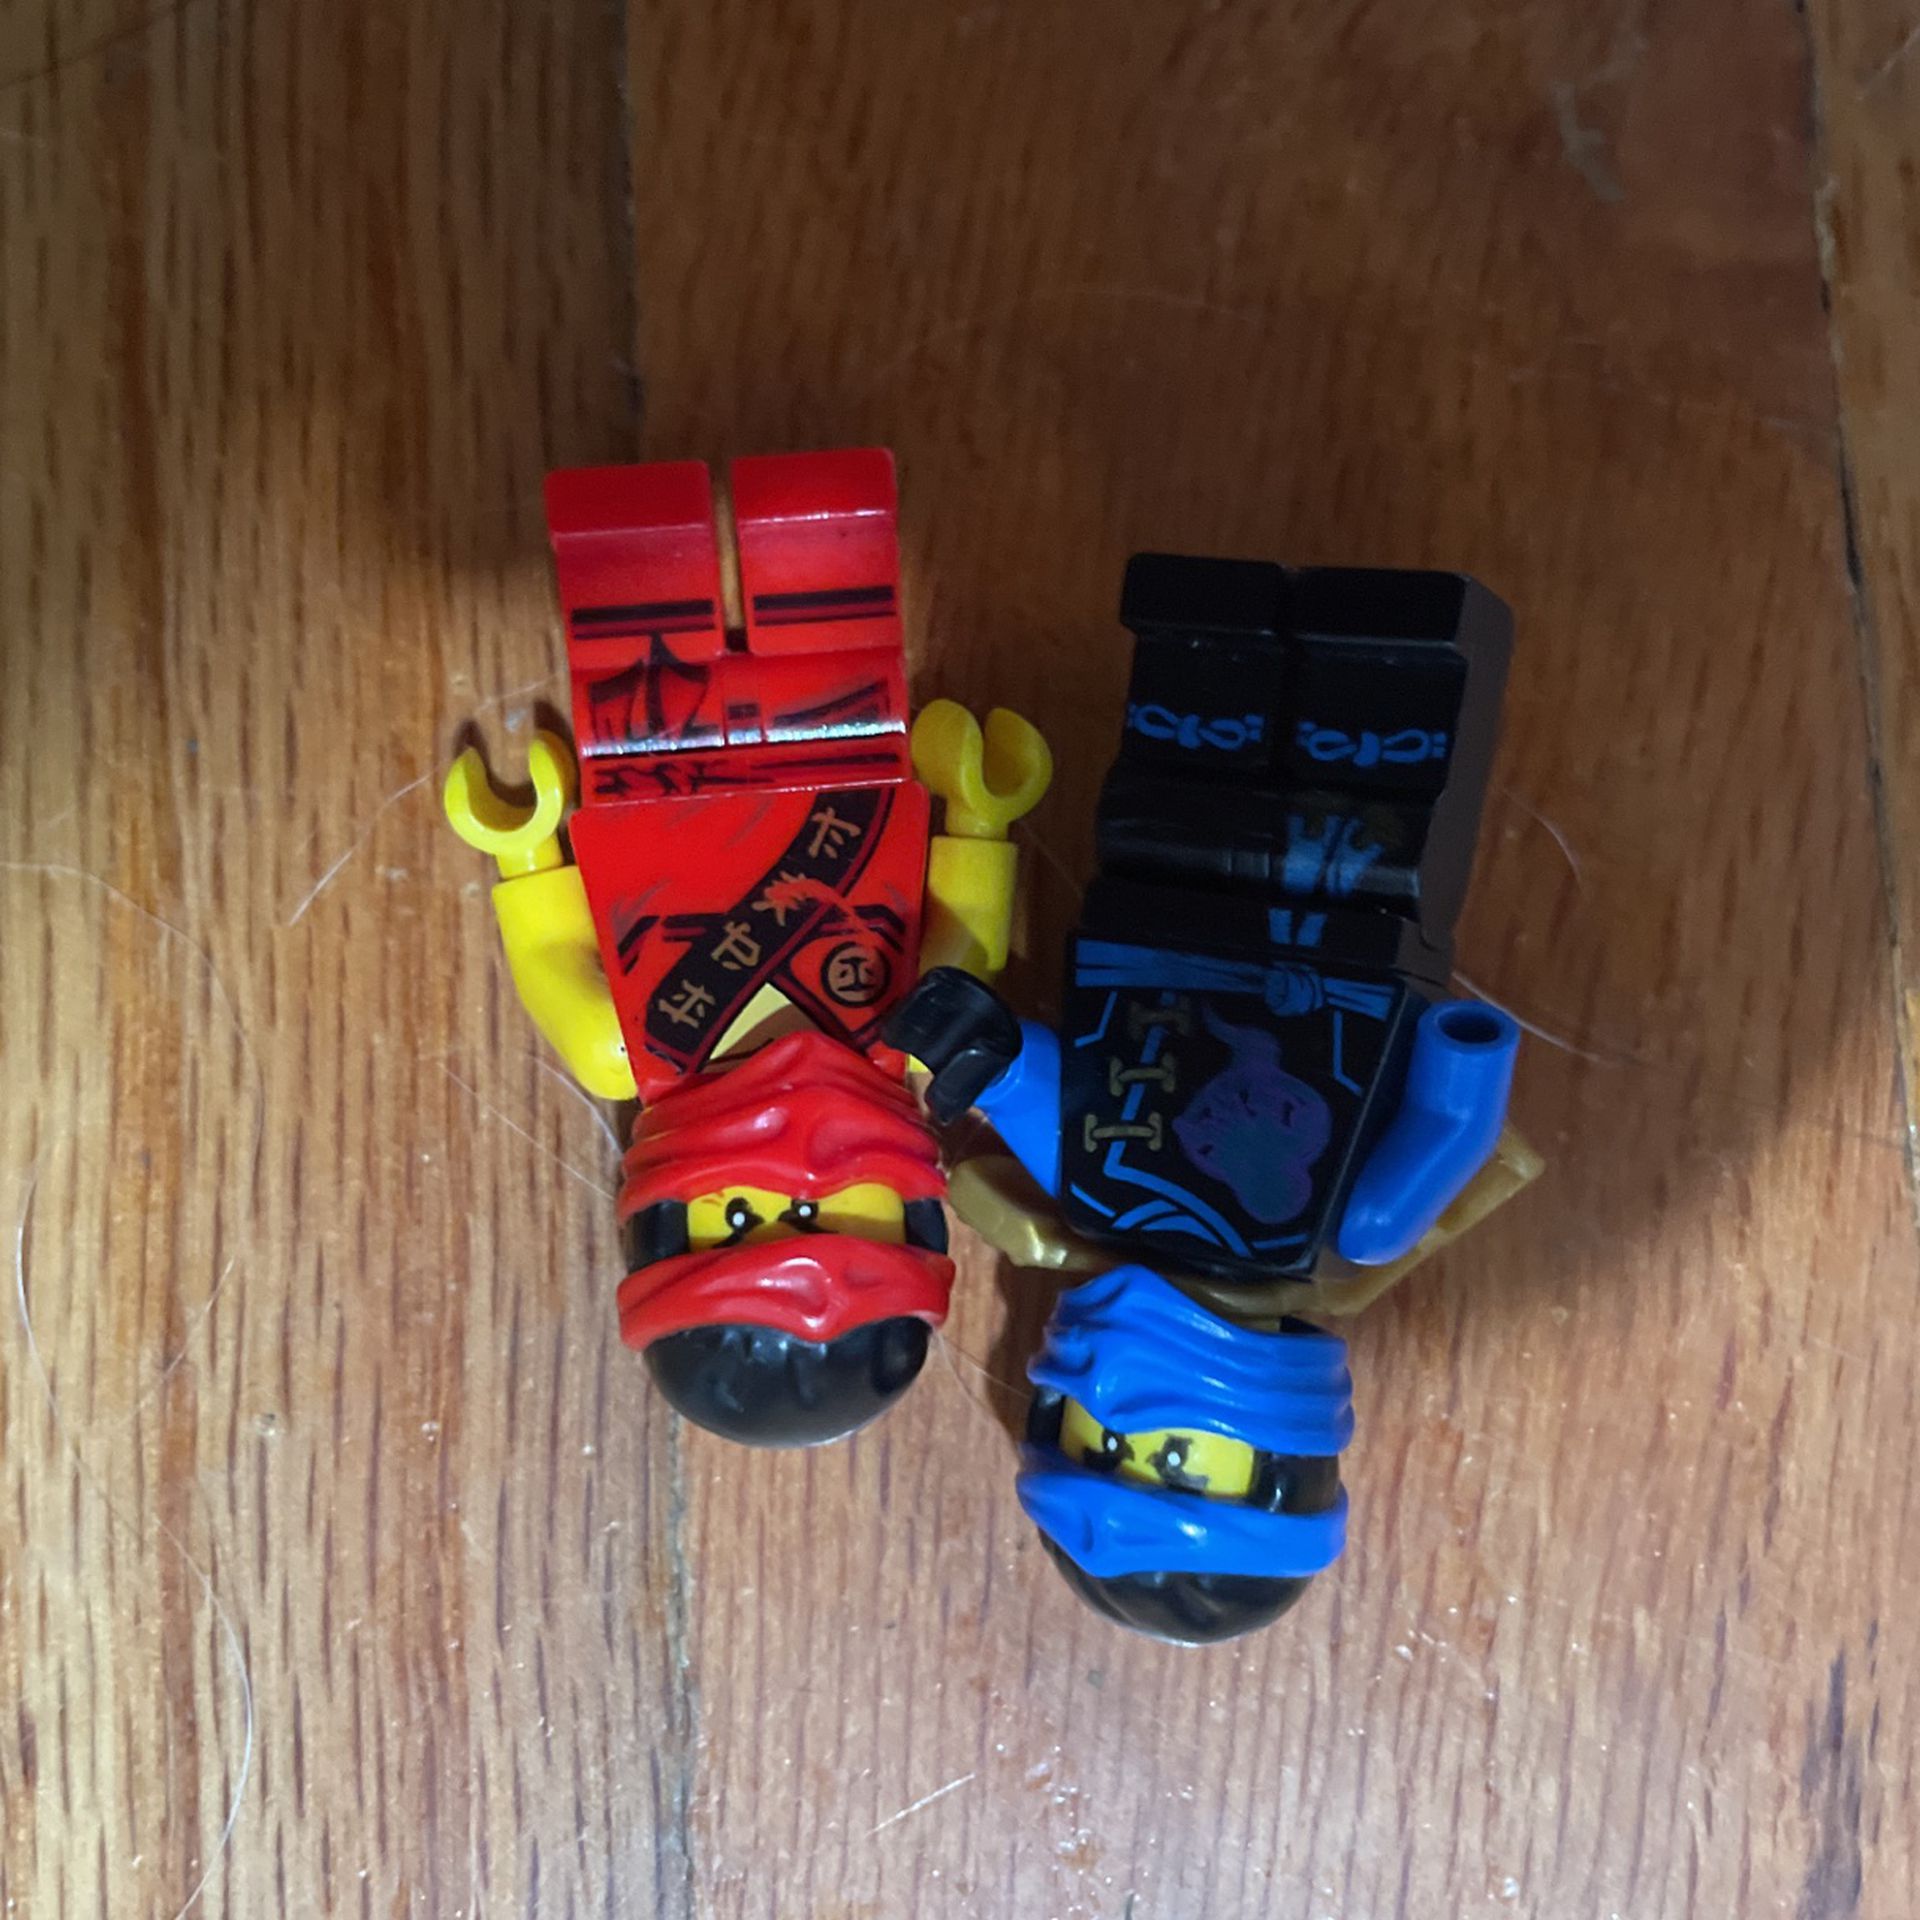 Lego Ninjago Just 1 Minifigure